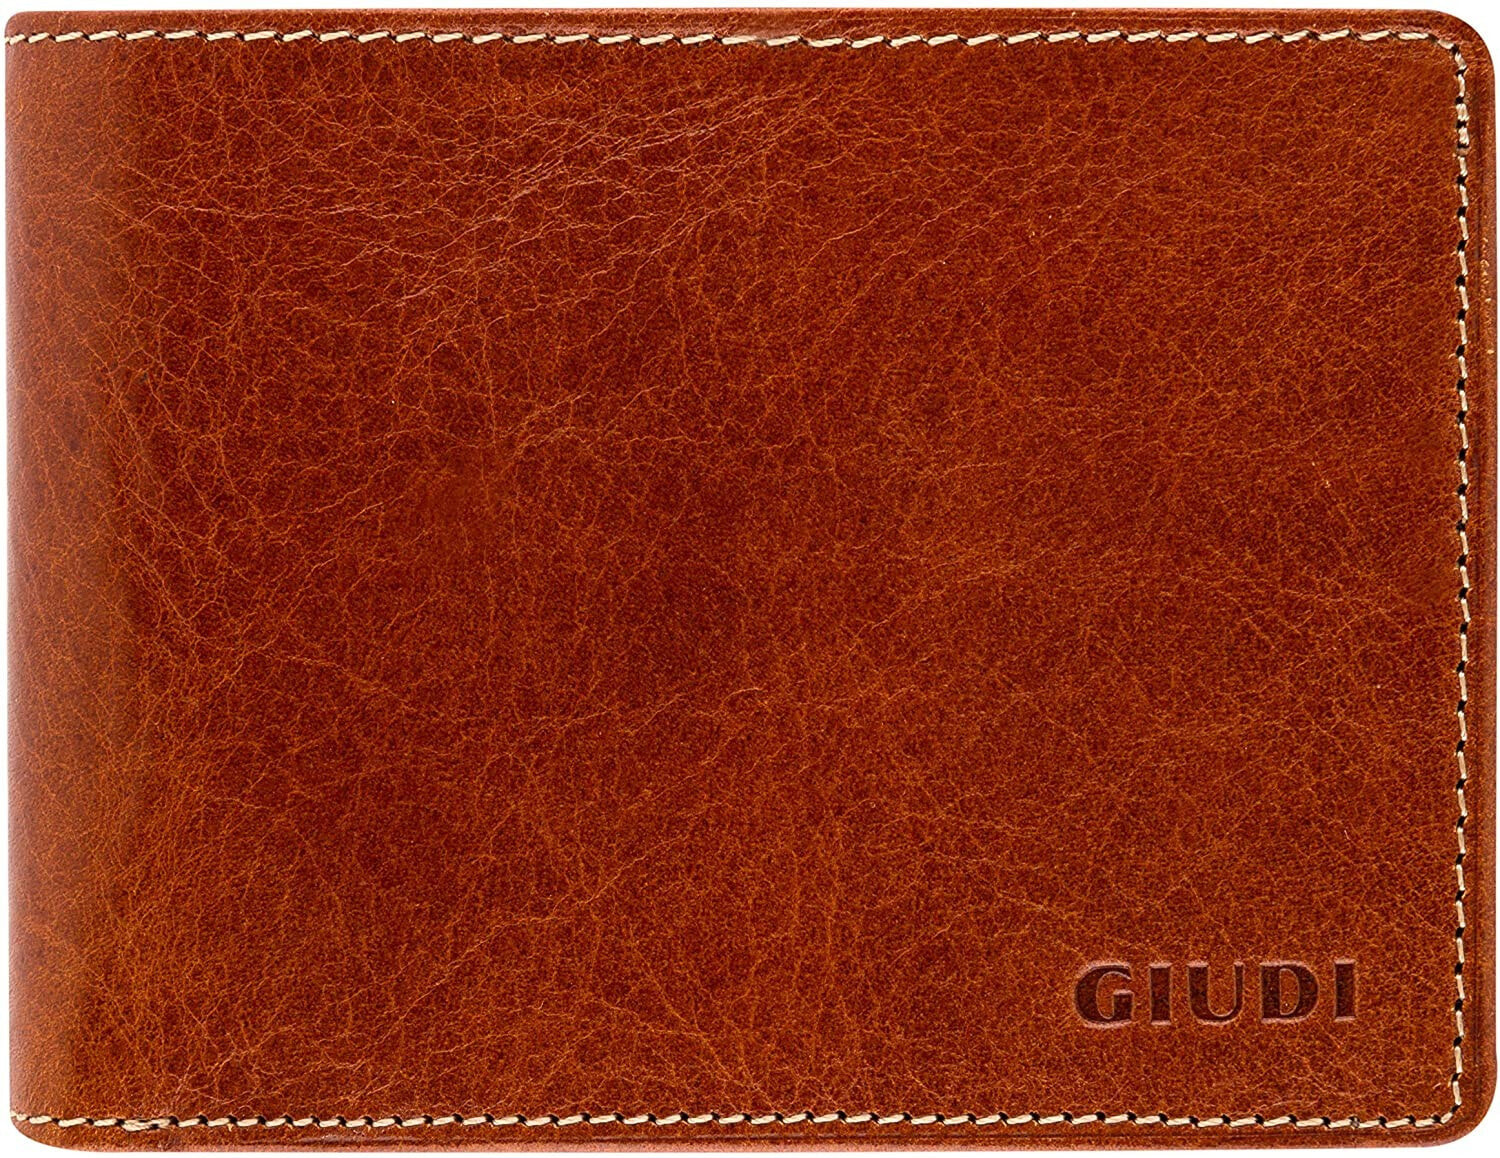 Мужское портмоне кожаное горизонтальное коричневое без застежки Giudi Italian Mens Leather Wallet  Perfect Luxury Gift for Men  Made in Italy